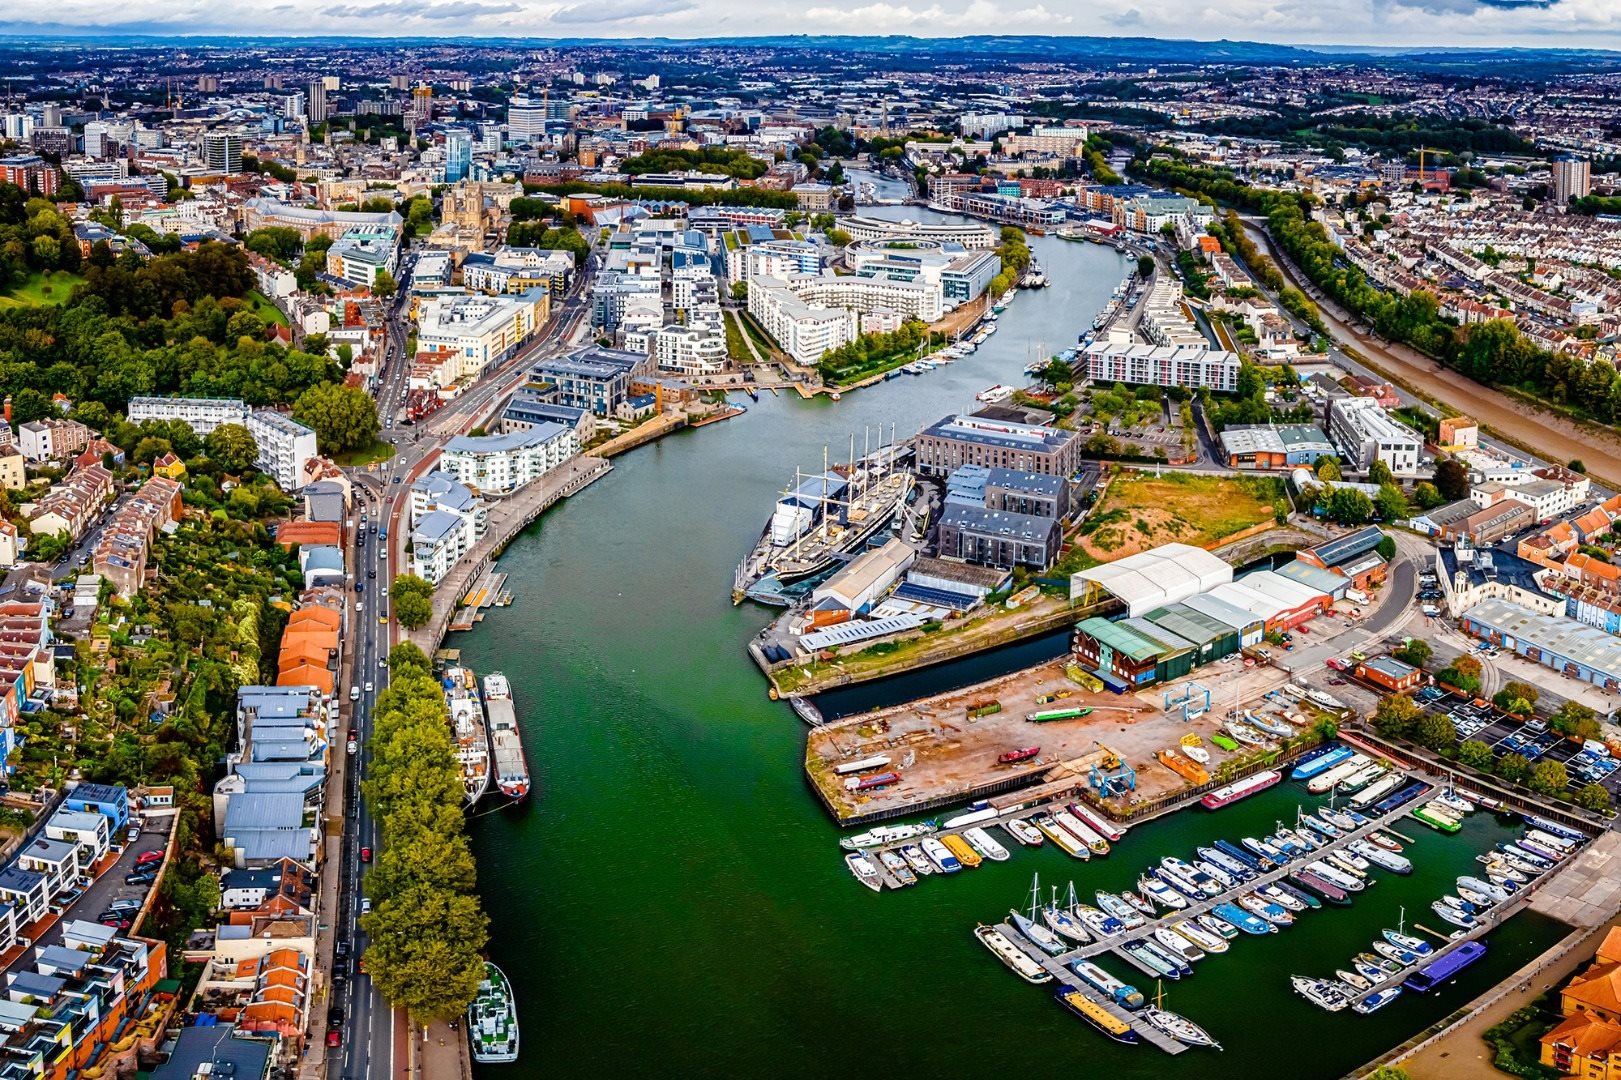 Aerial view of Bristol city